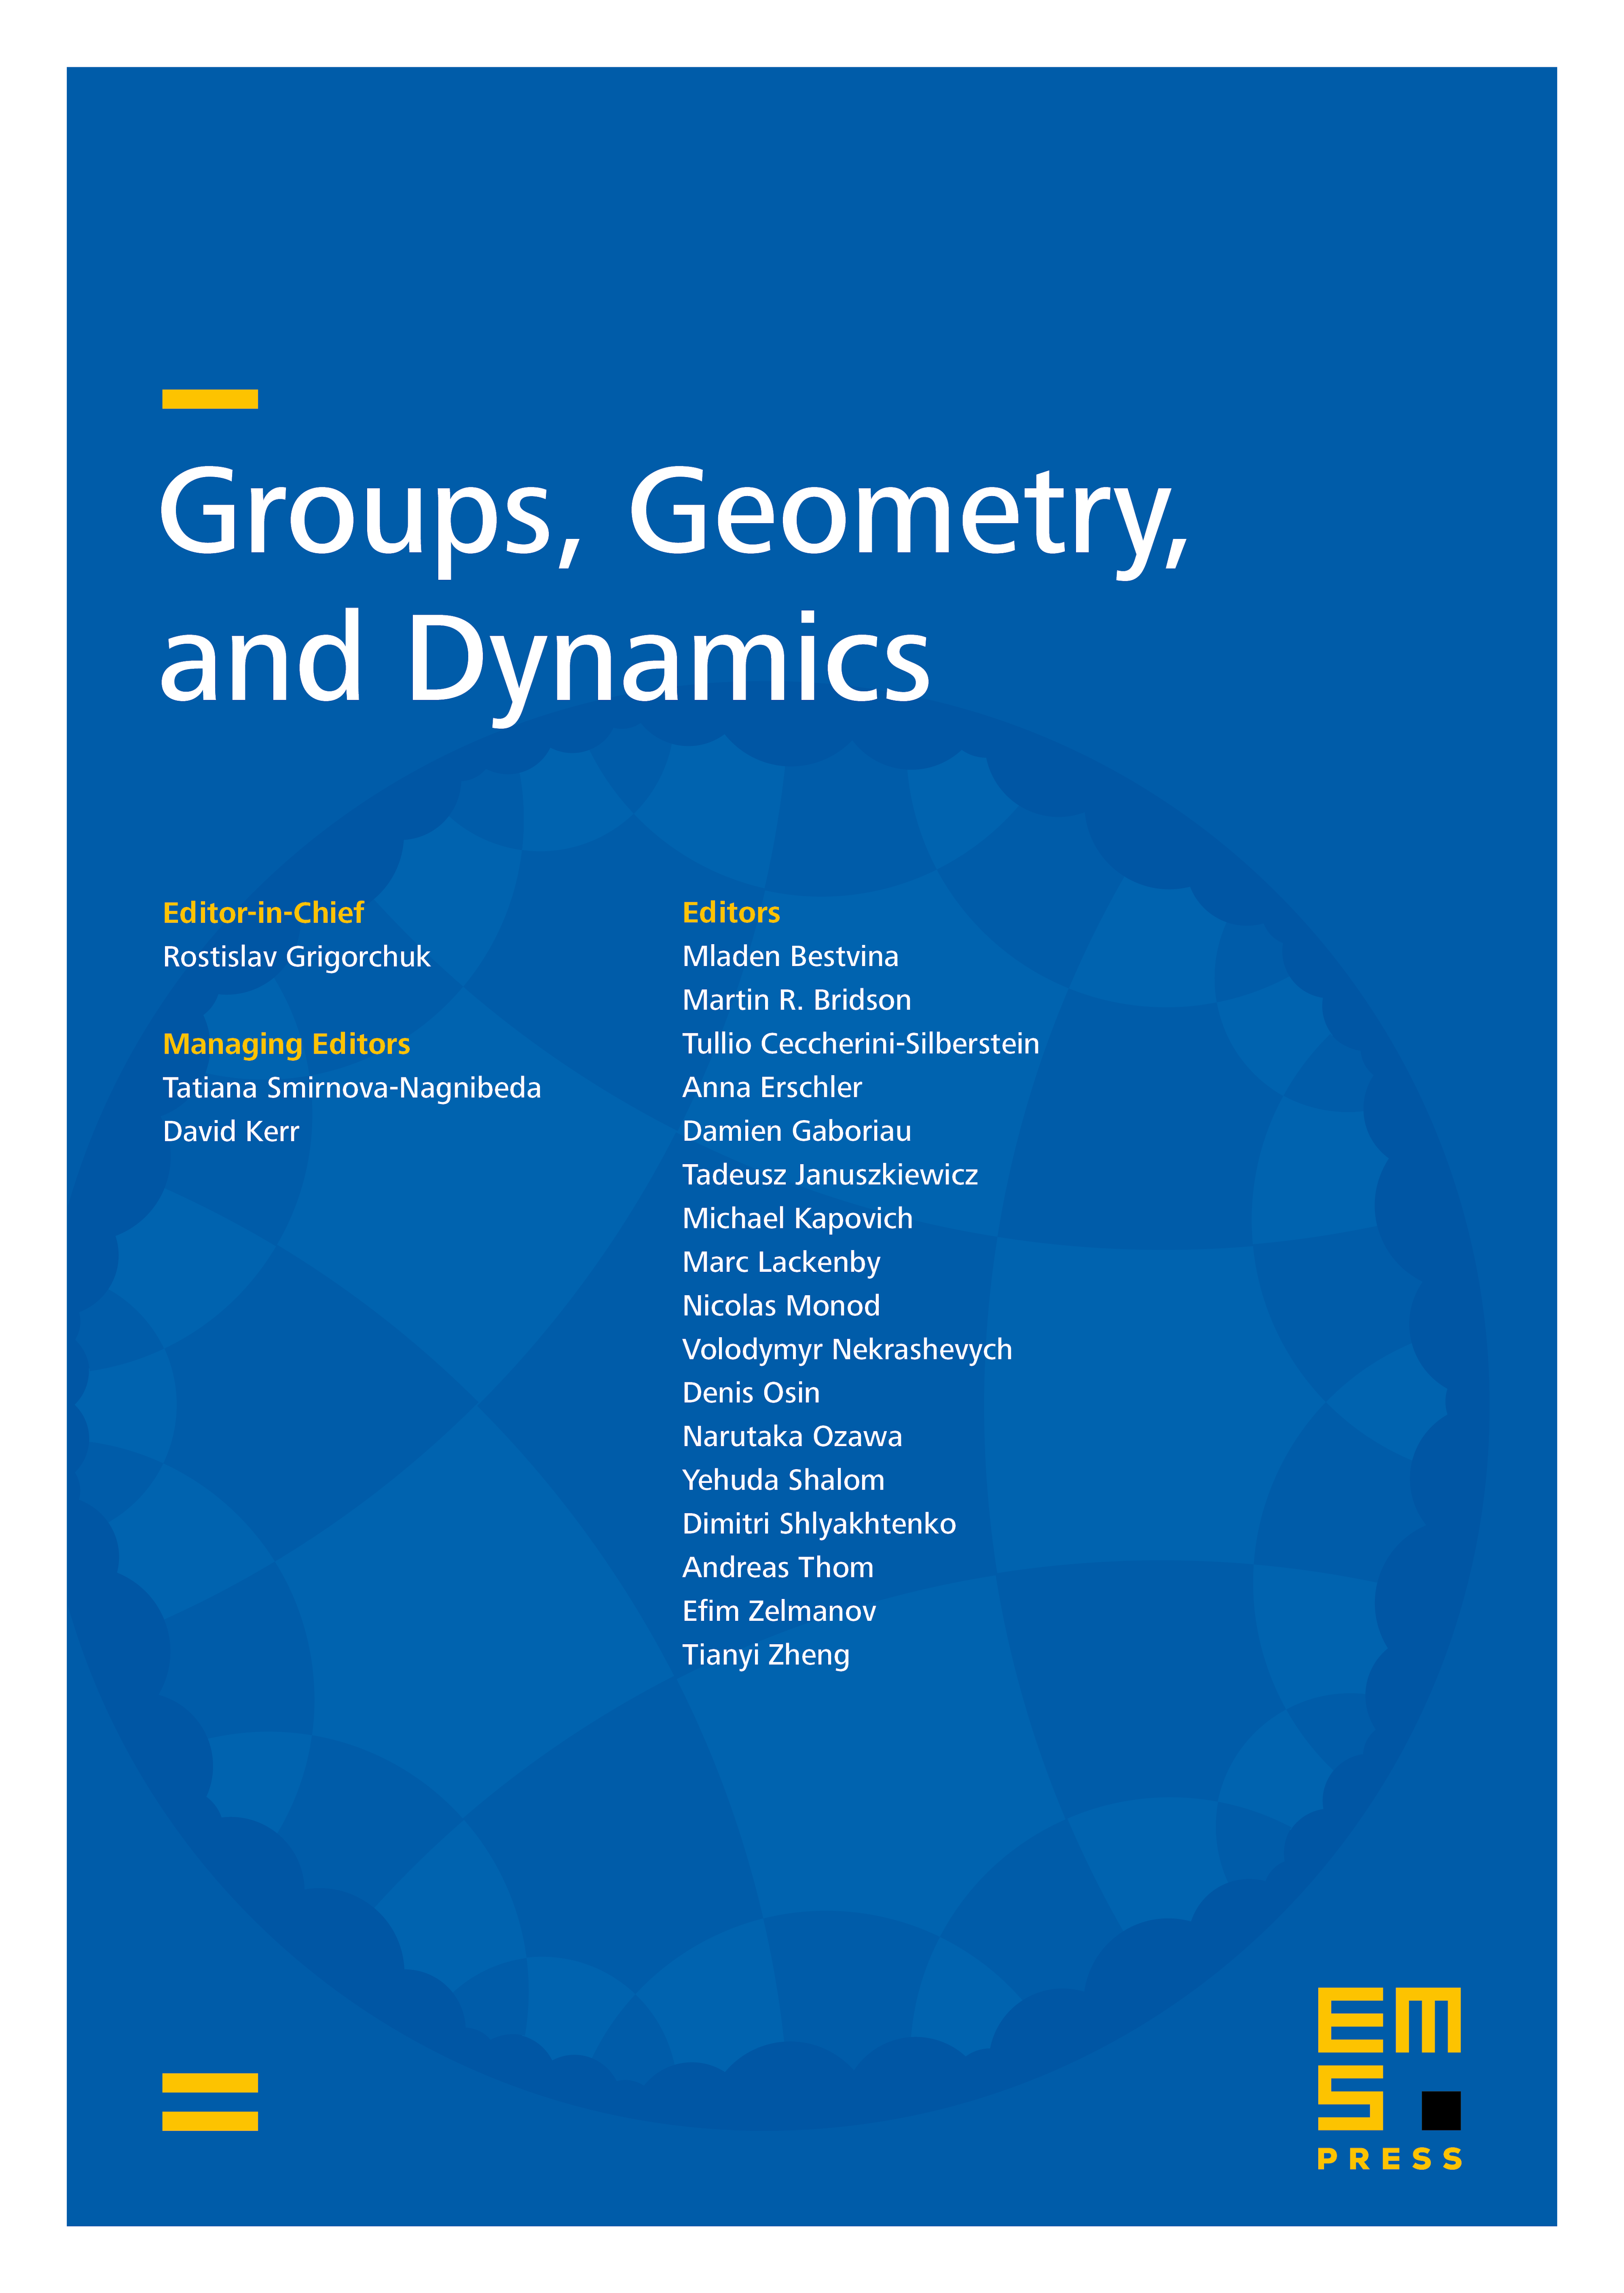 Cubulating rhombus groups cover